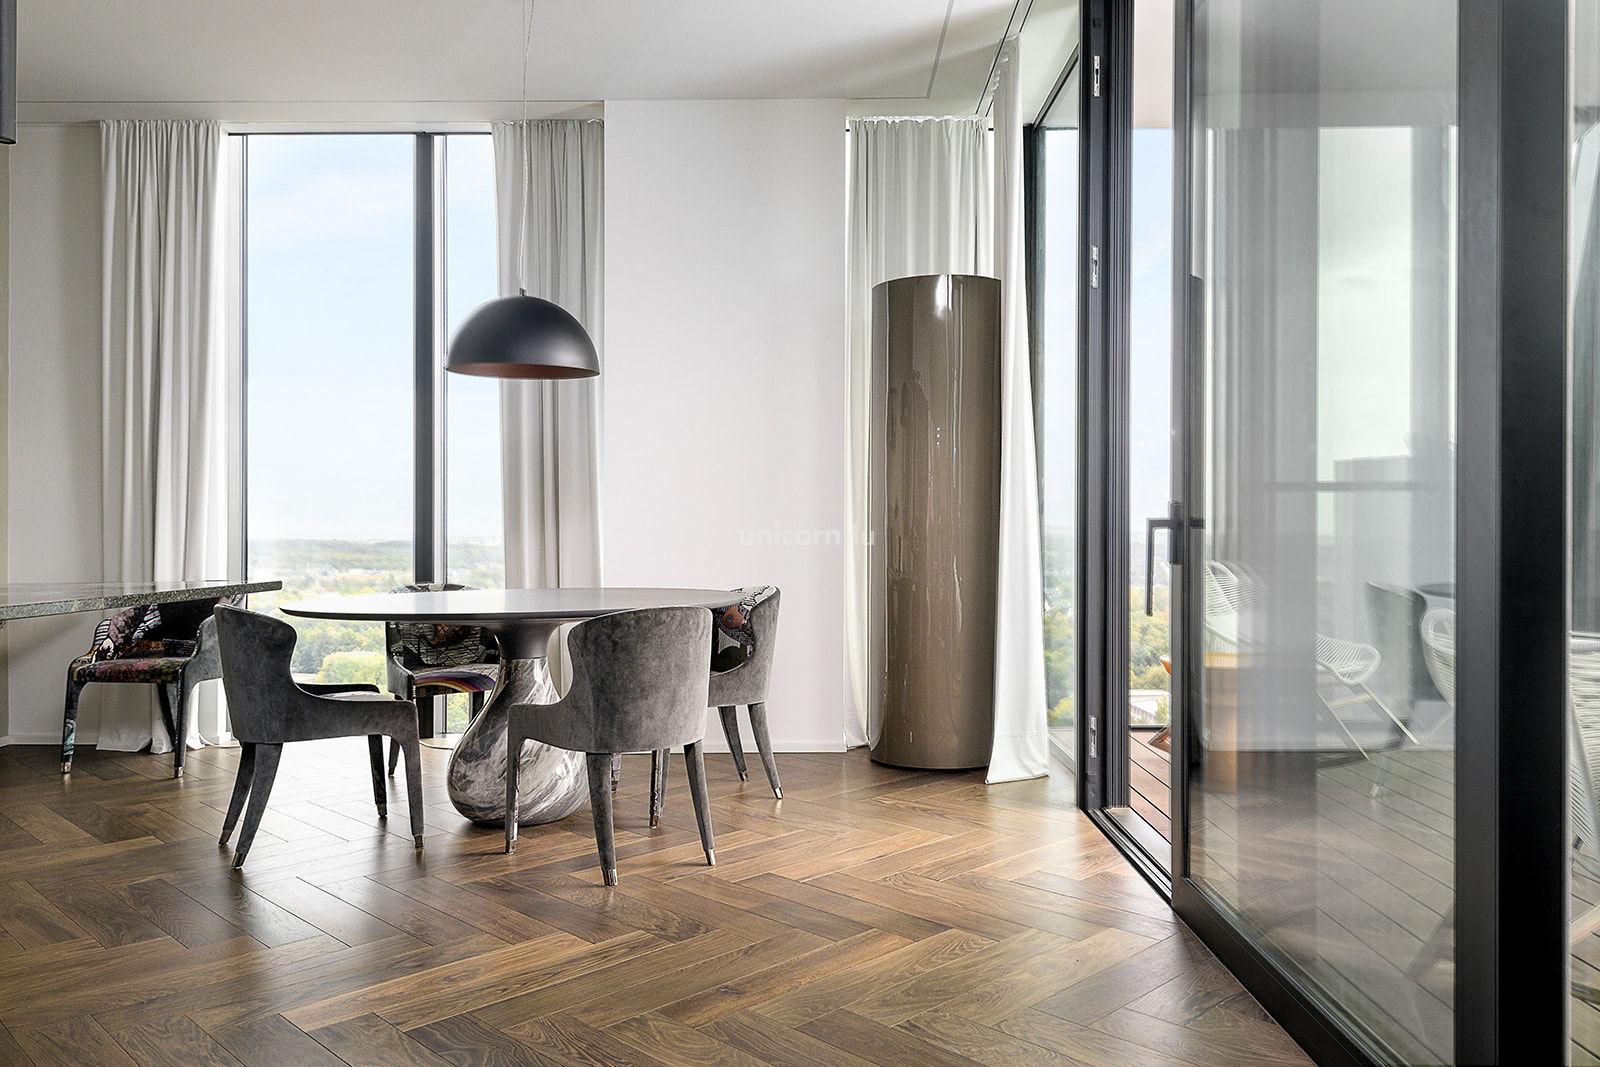 Appartement en vente à Luxembourg-Kirchberg  - 134.85m²